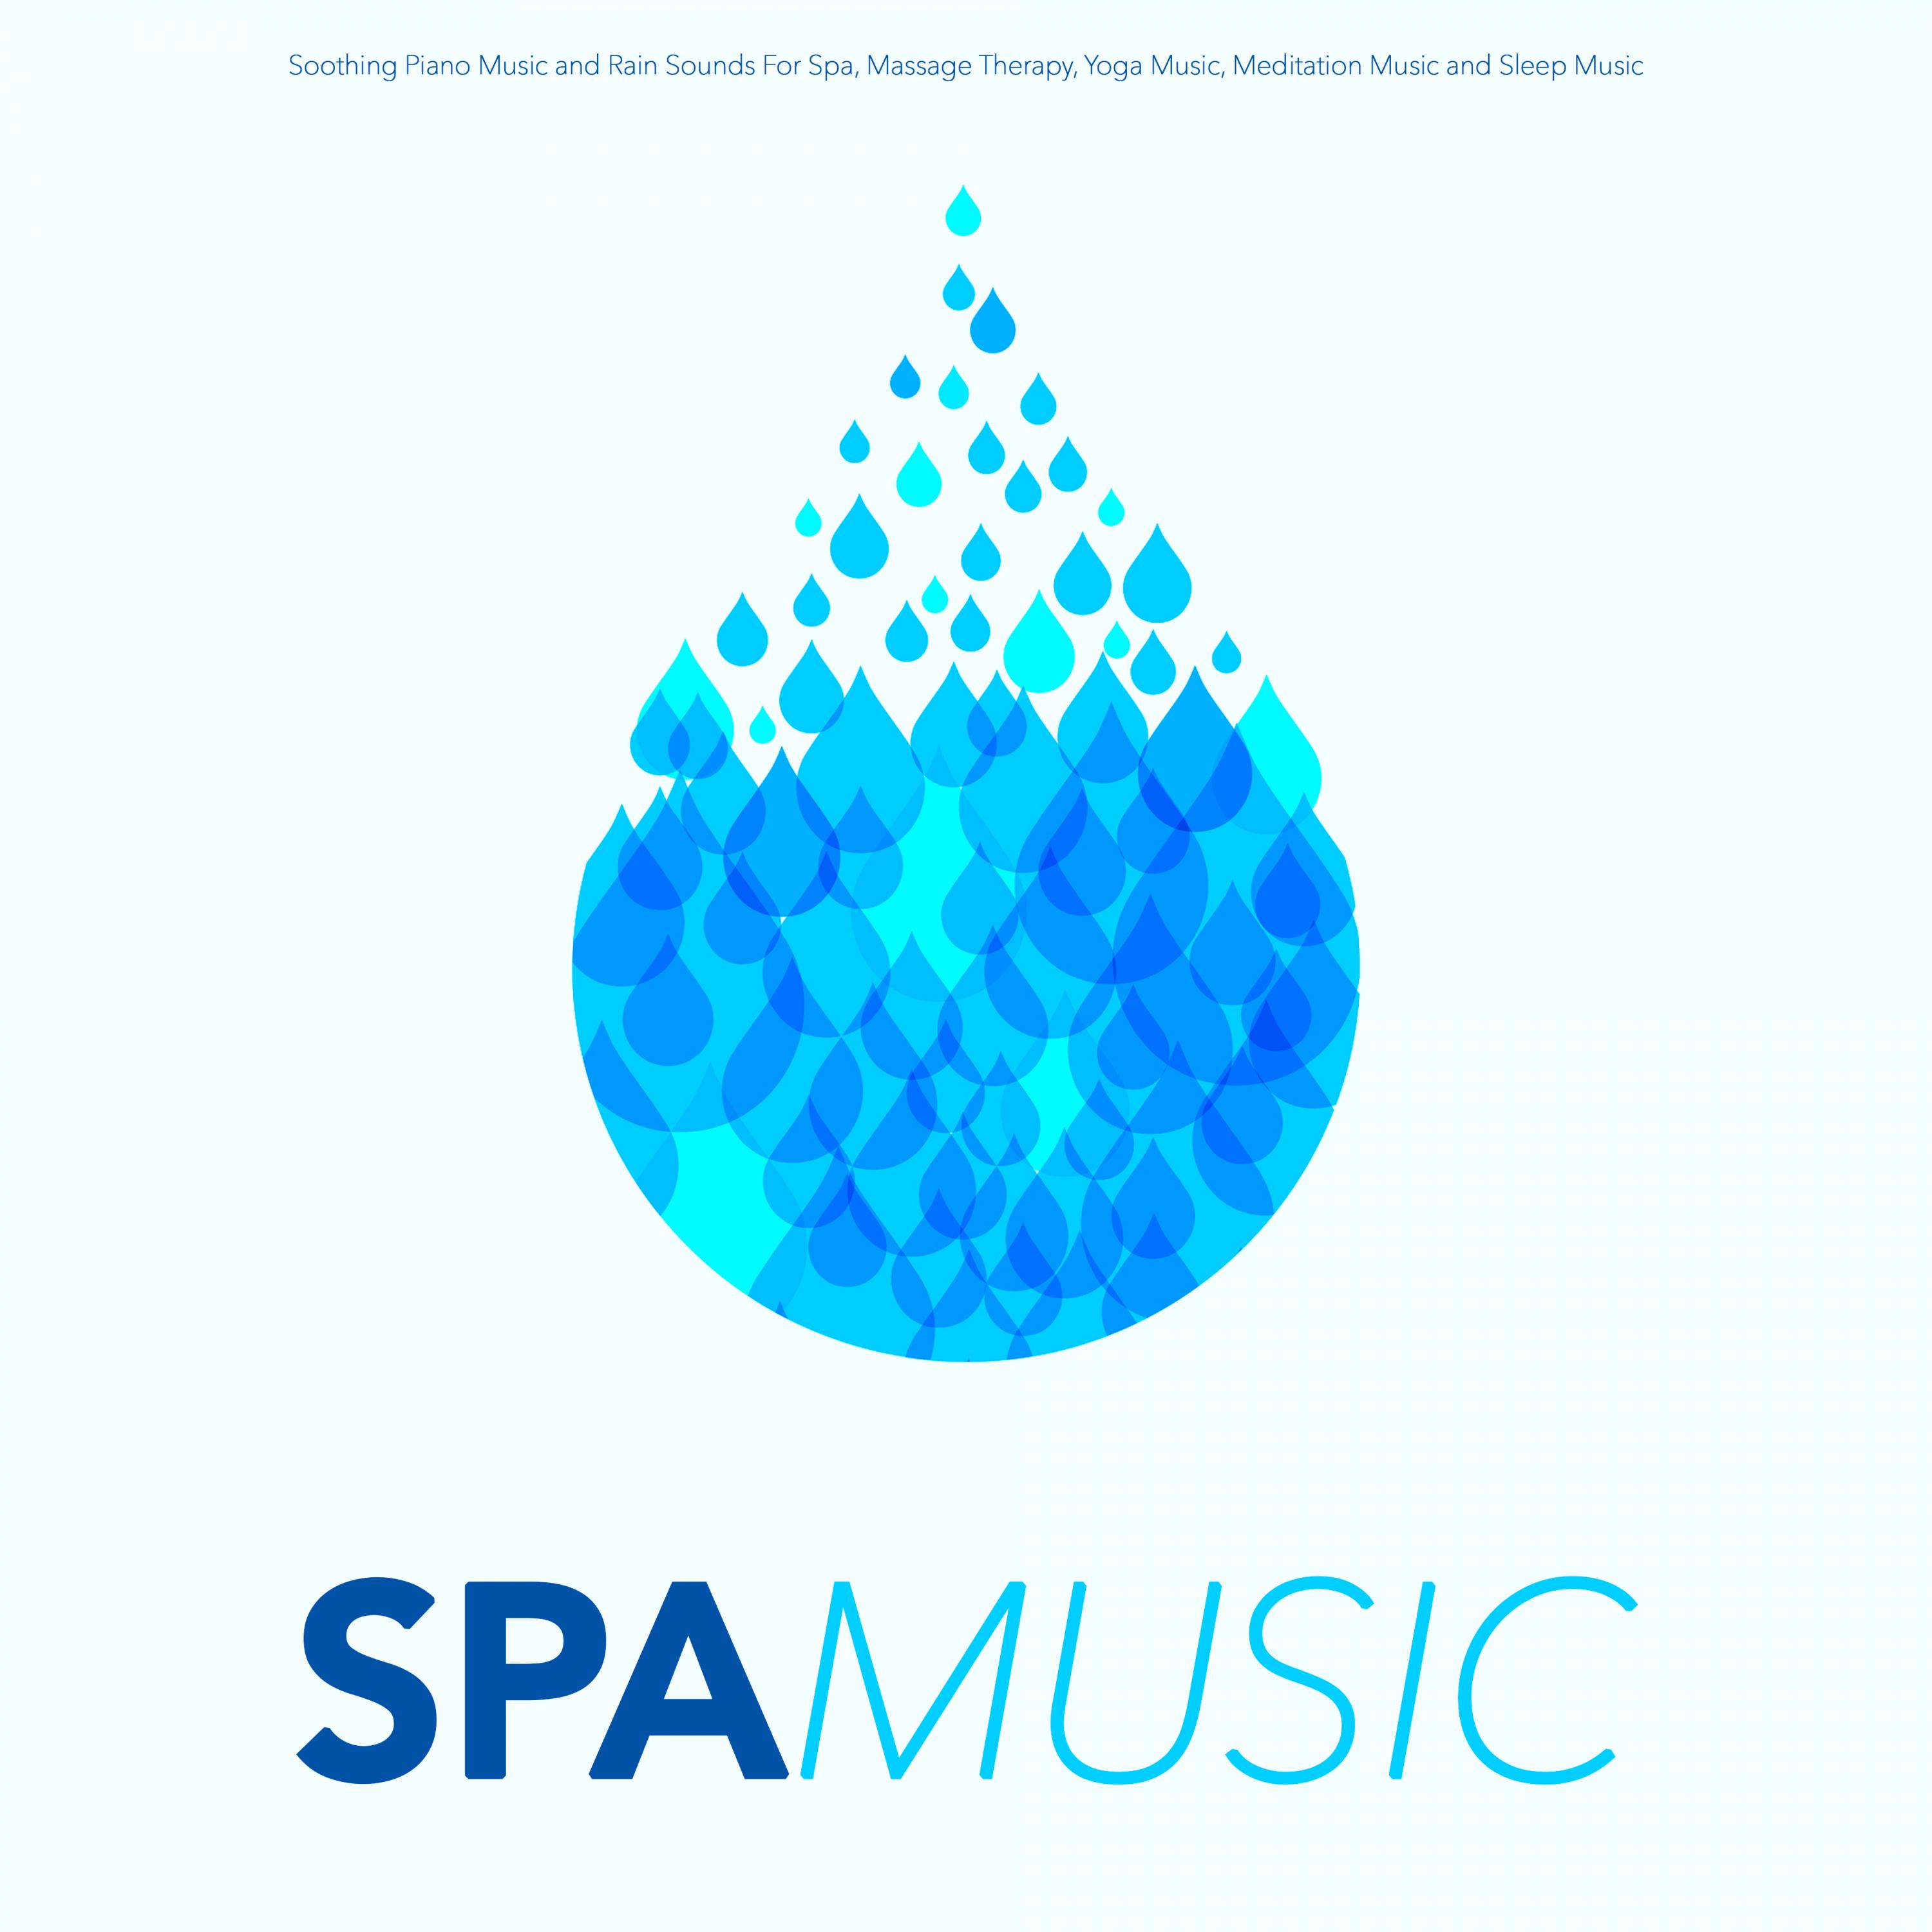 Rain Sounds and Spa Music